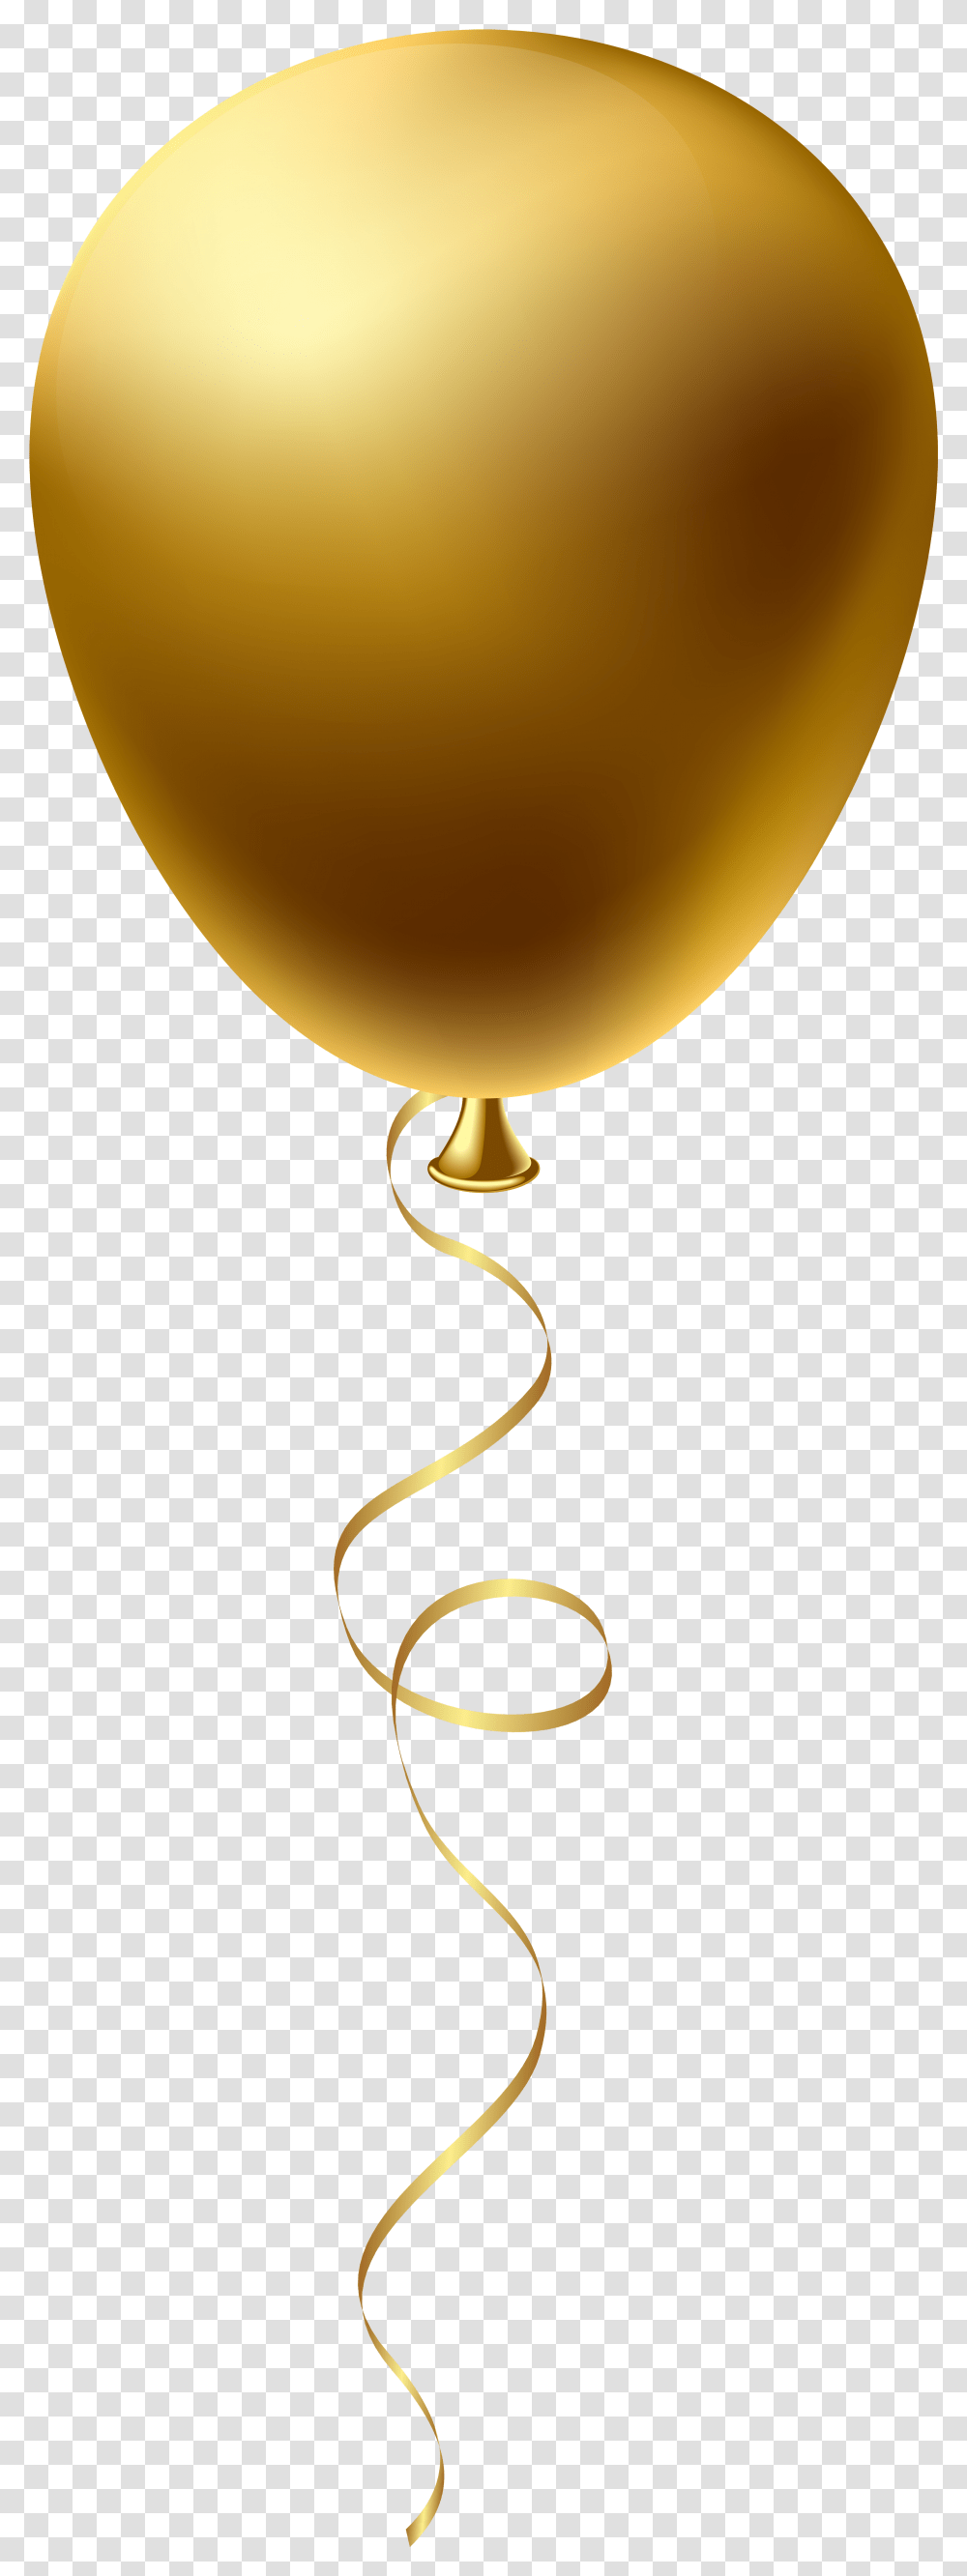 Gold Balloons Gold Balloons, Lamp, Glass Transparent Png